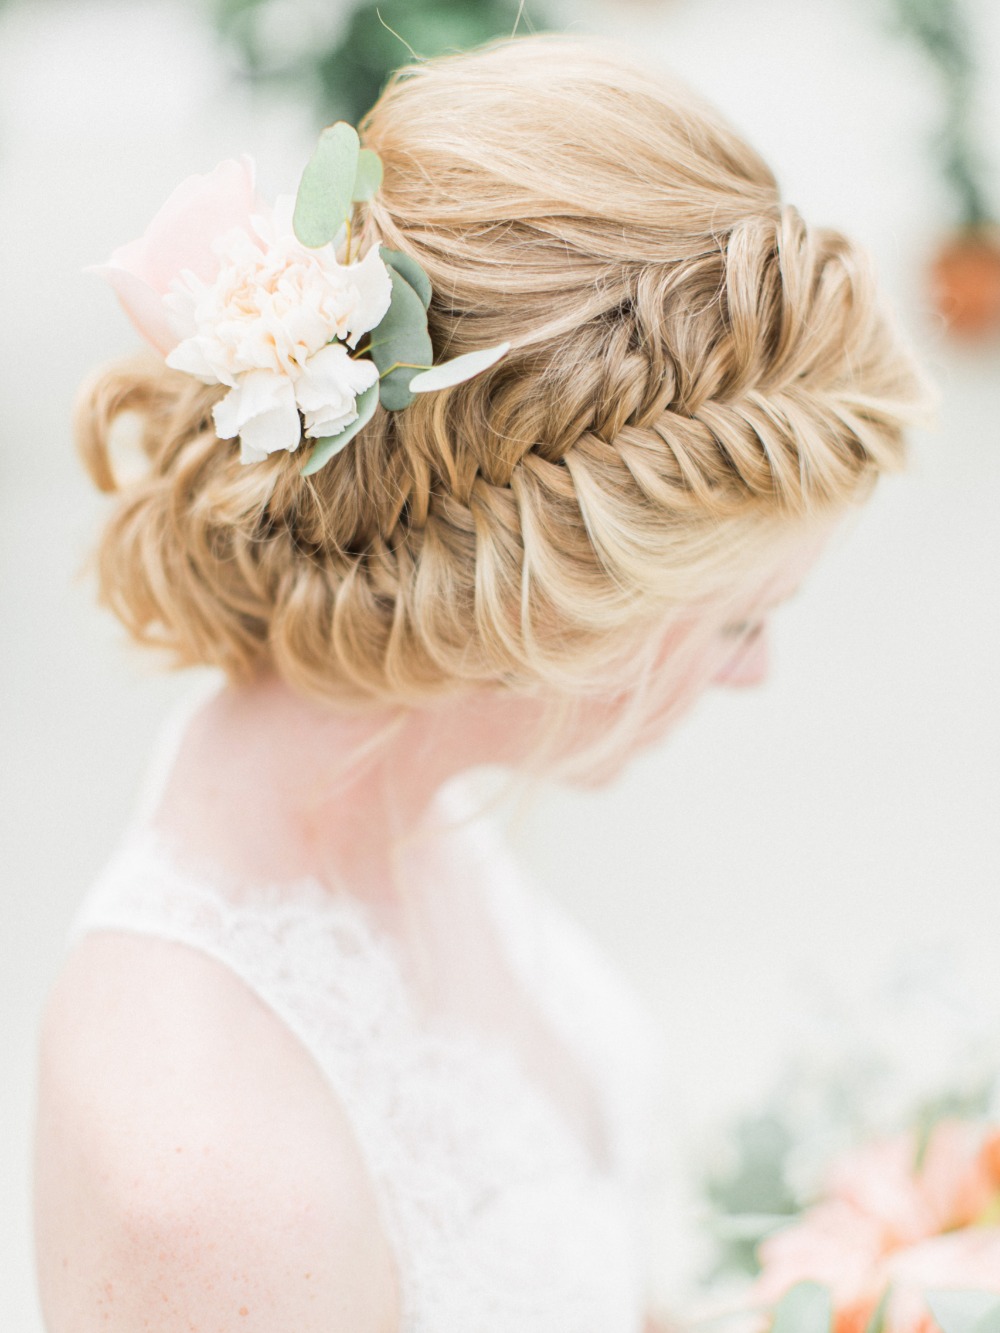 Gorgeous braided wedding hair